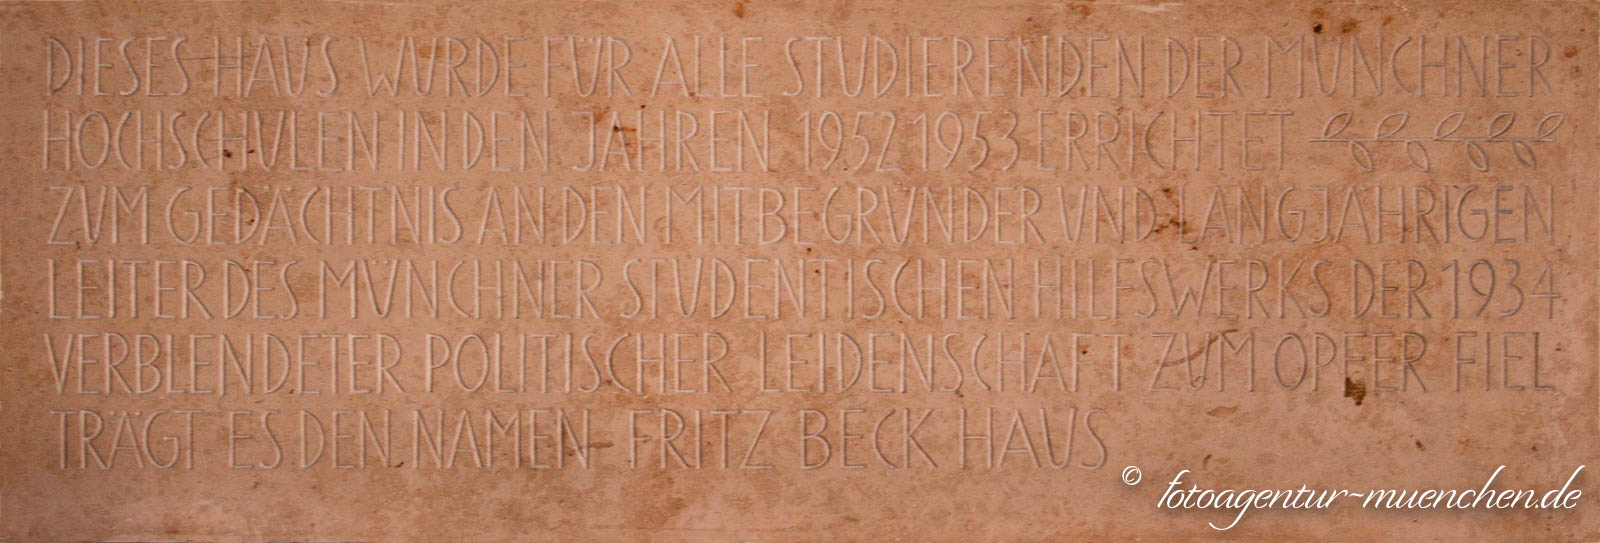 Gedenktafel - Fritz Beck Studentenhaus